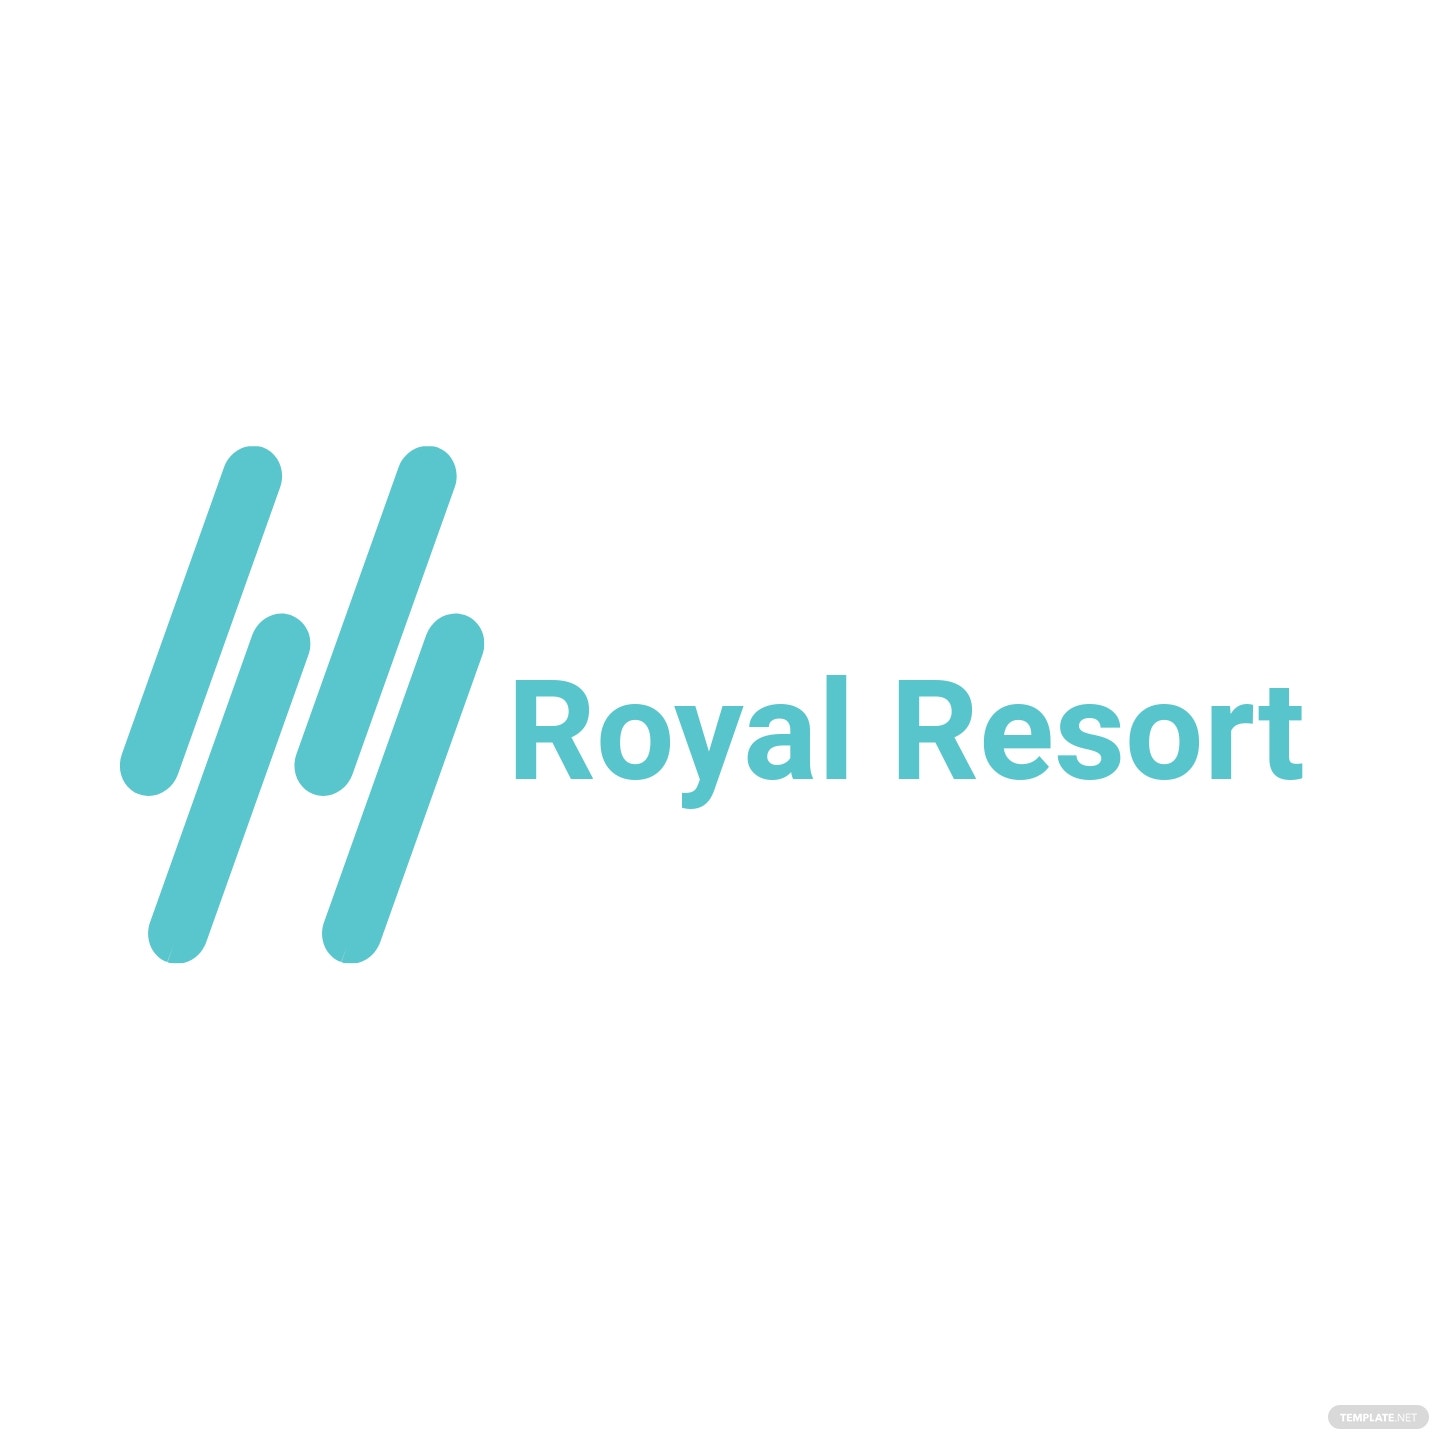 royal resort logo template